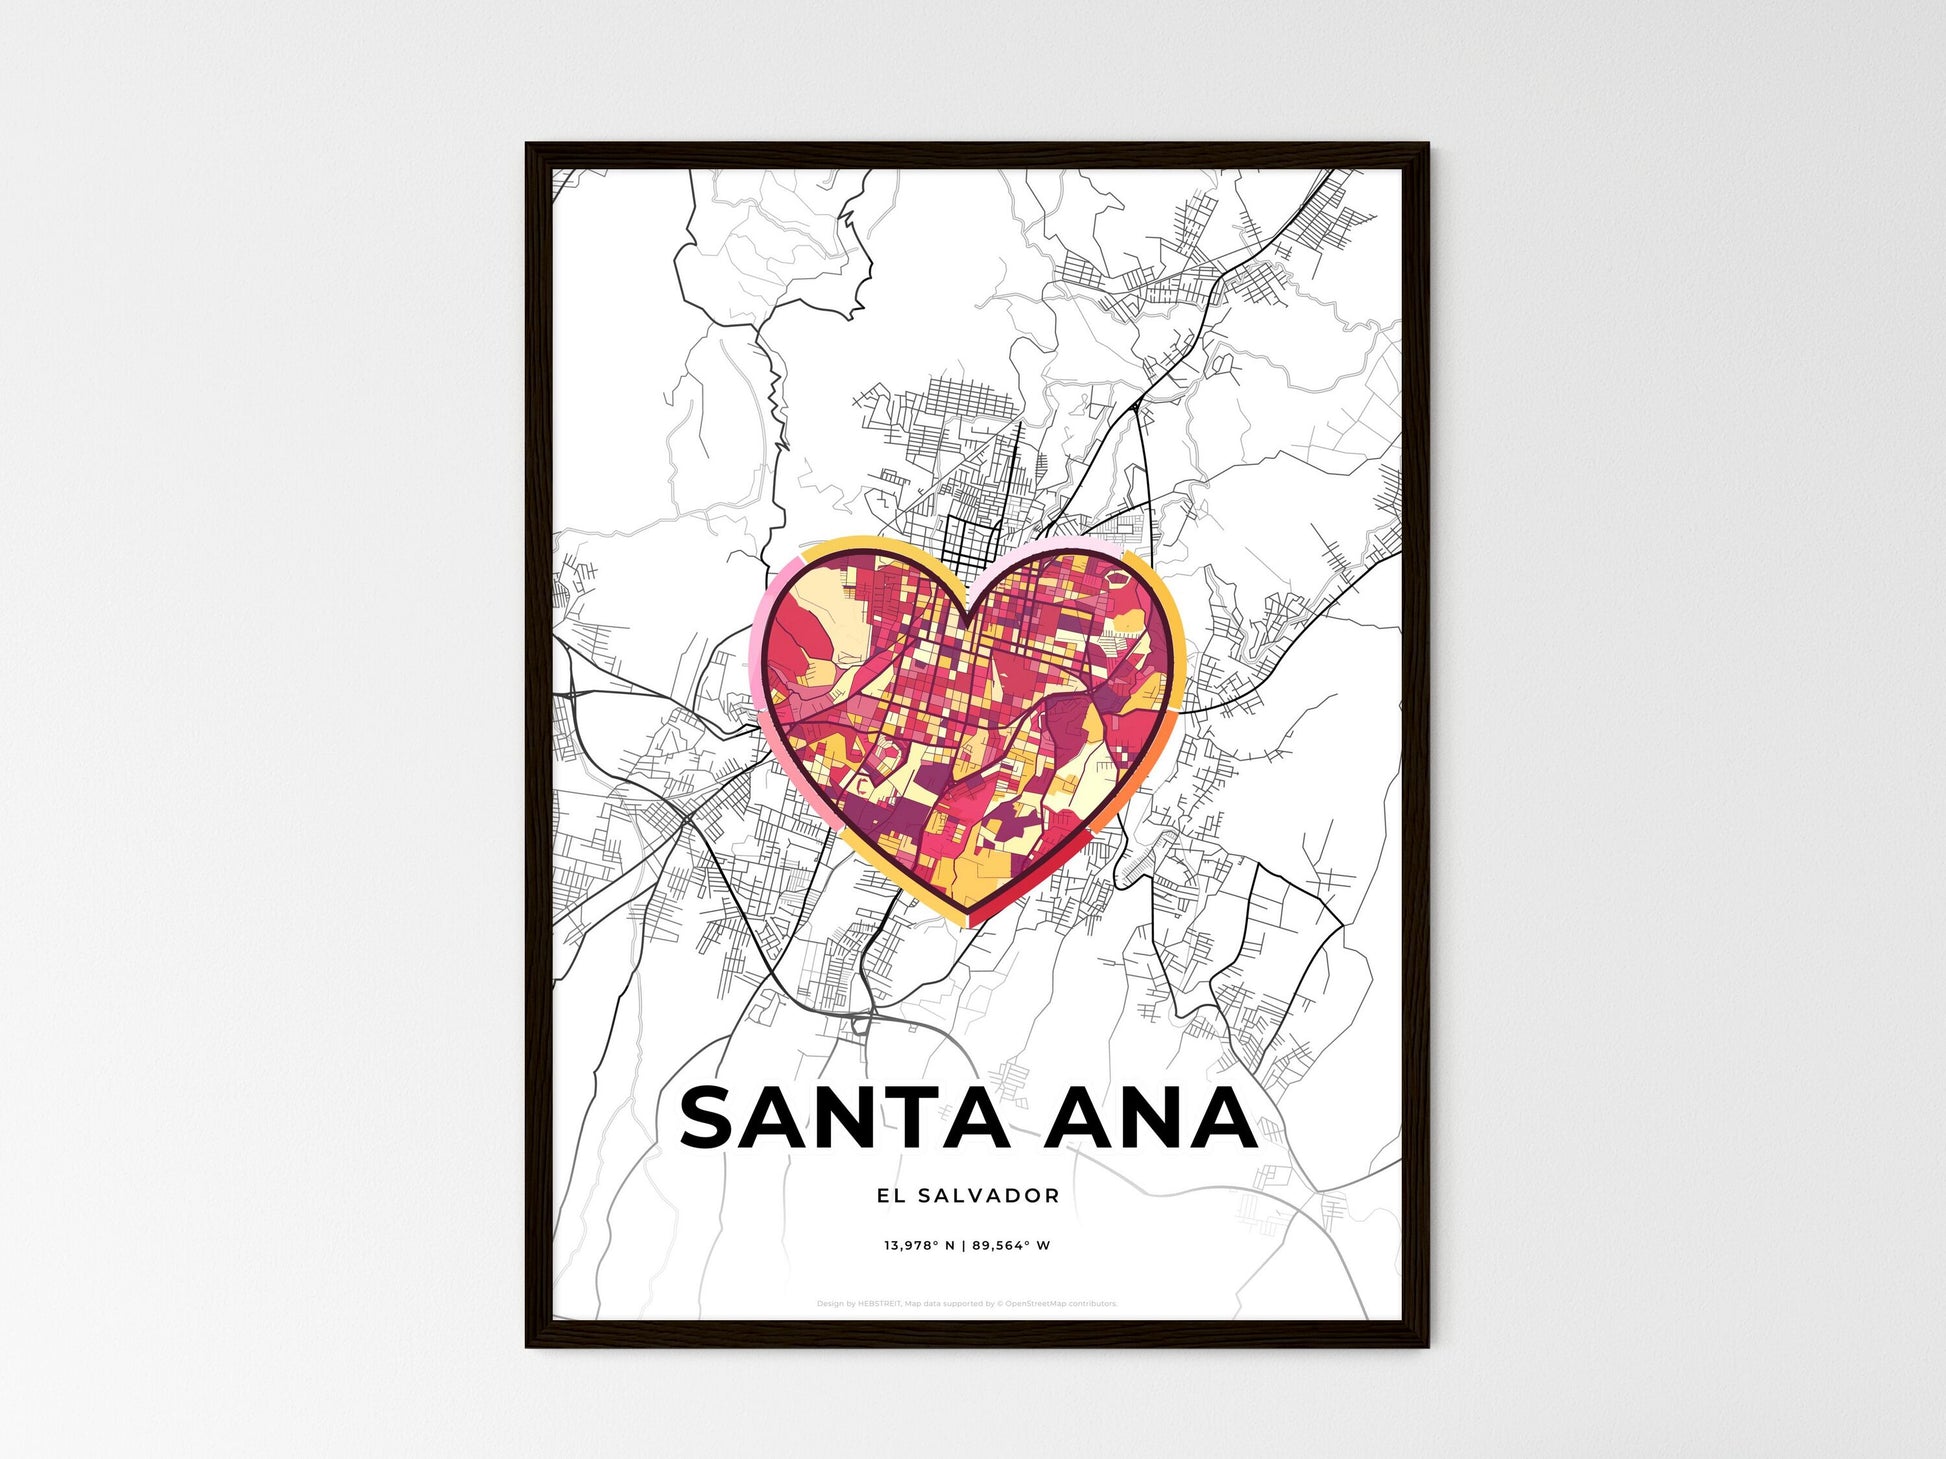 SANTA ANA EL SALVADOR minimal art map with a colorful icon. Style 2